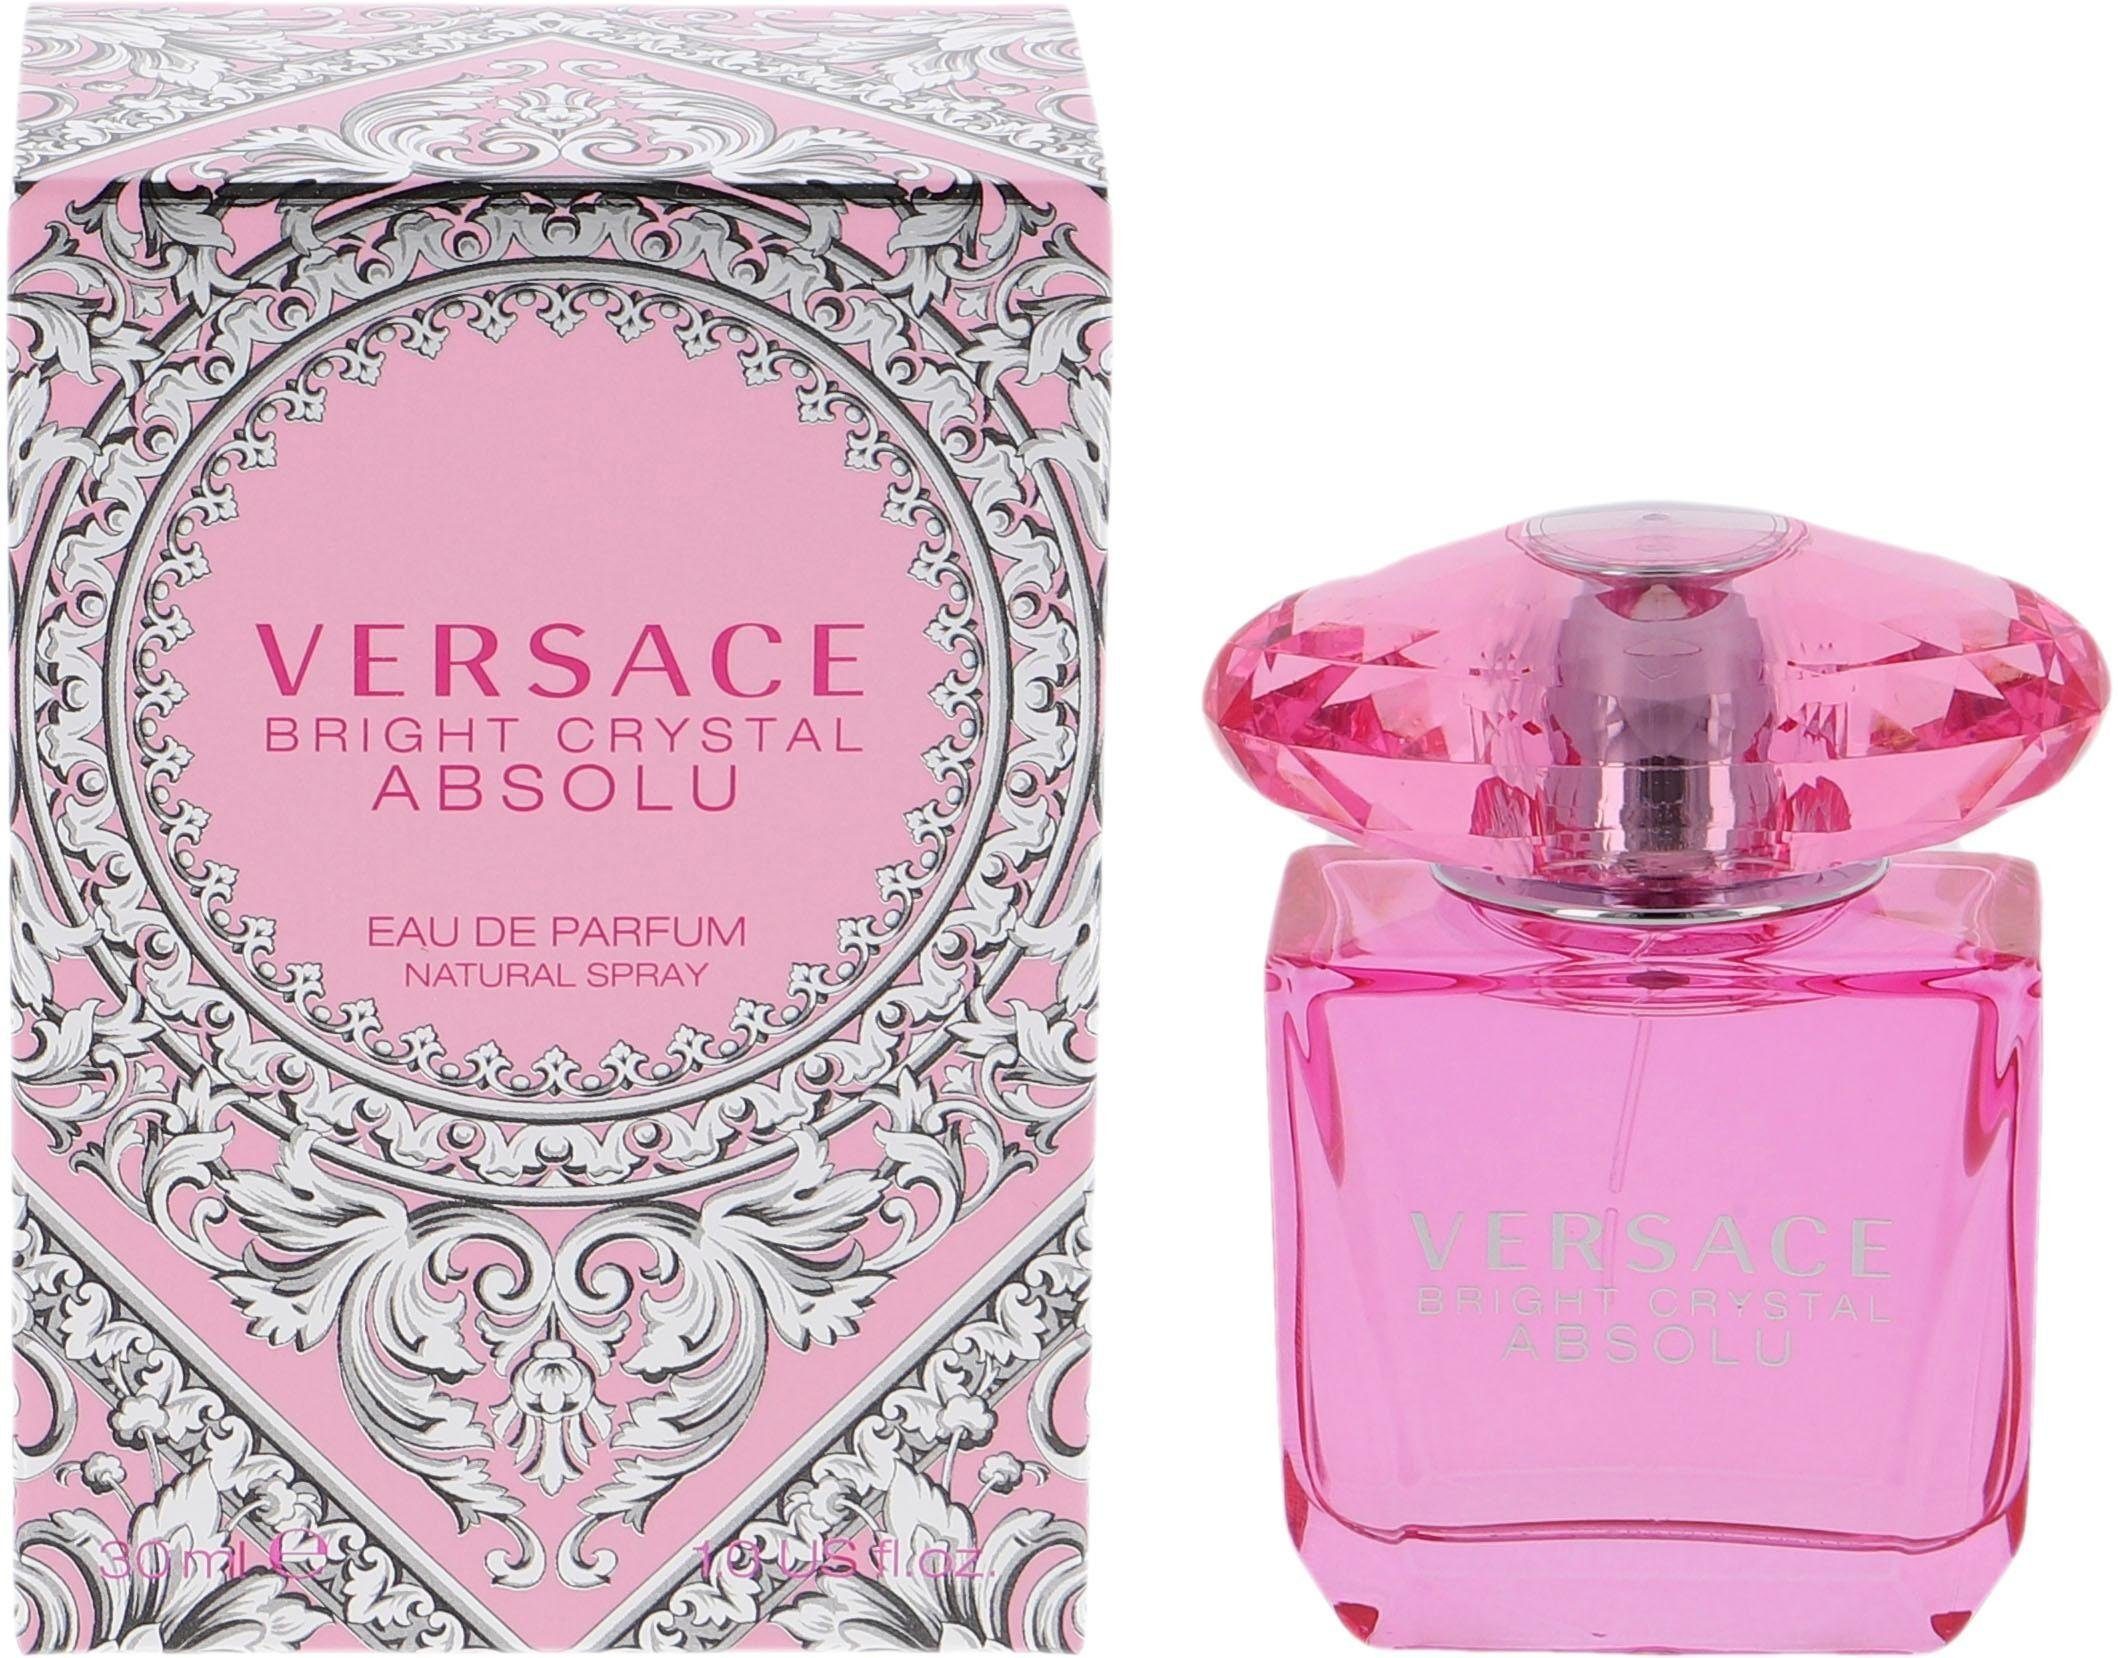 Versace Eau de Parfum Absolu Crystal Versace Bright